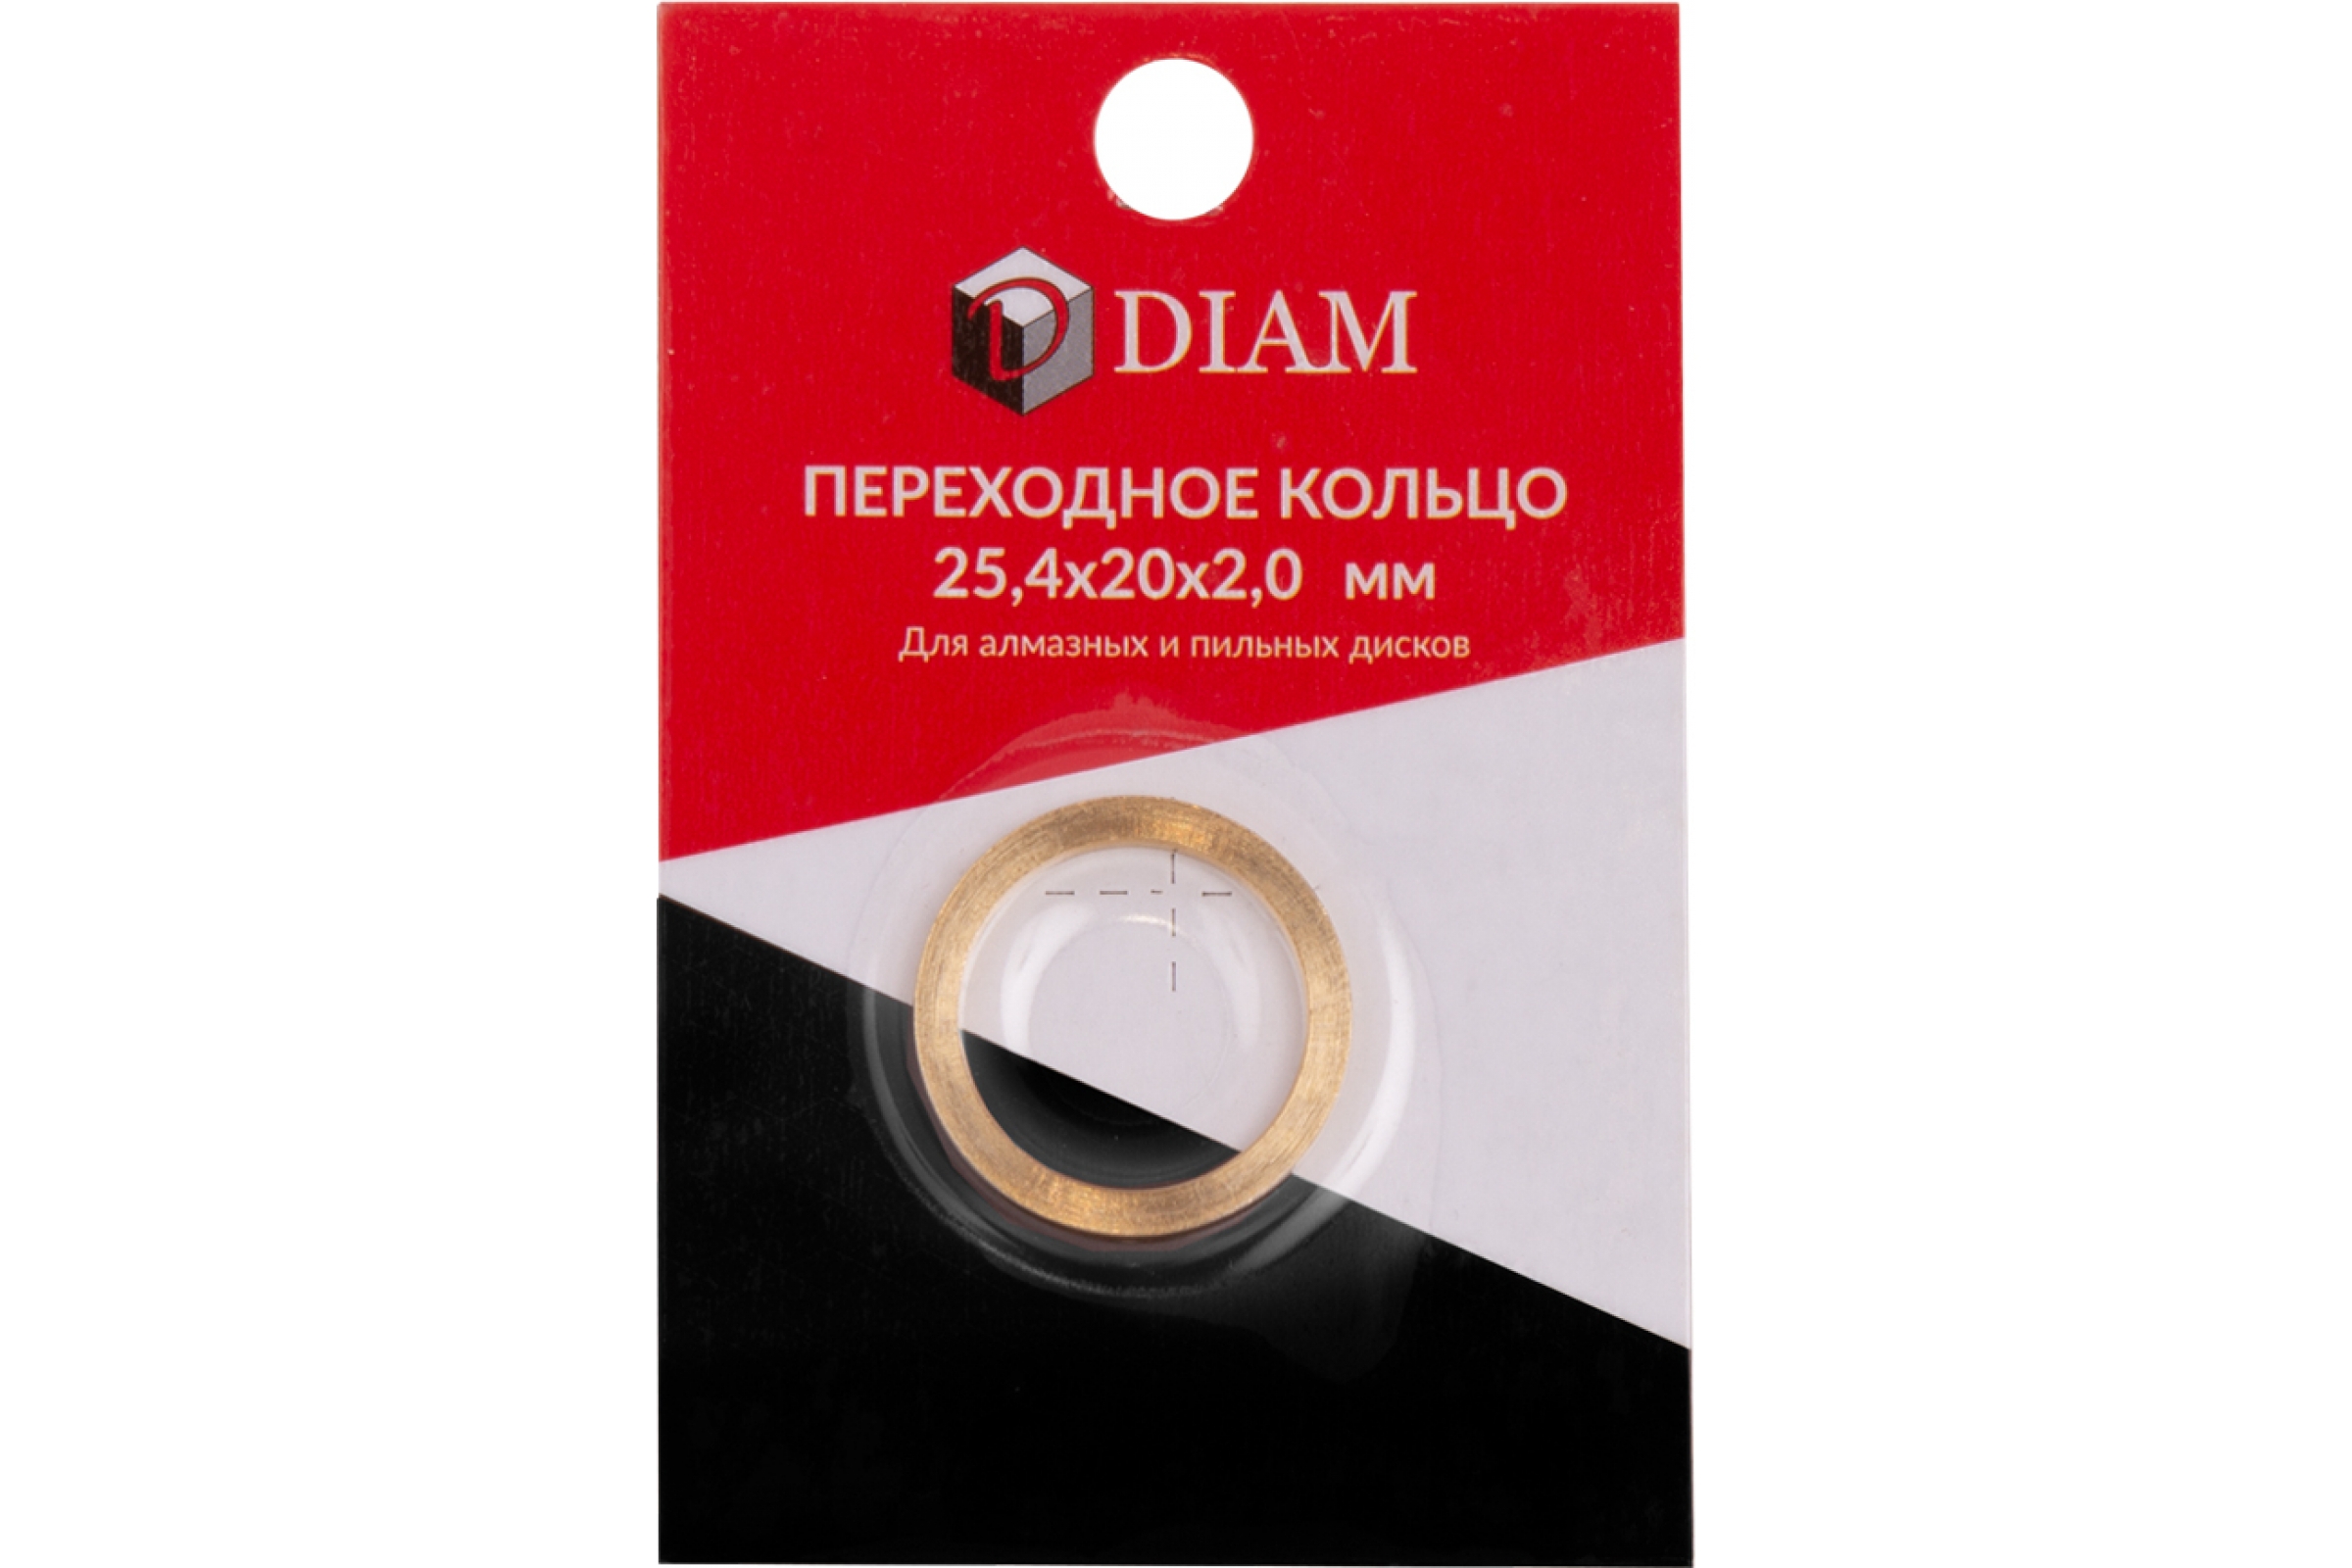 Кольцо переходное DIAM 25,4х20х2,0 (640083) (DIAM) кольцо переходное diam 25 4х20х2 0 640083 diam